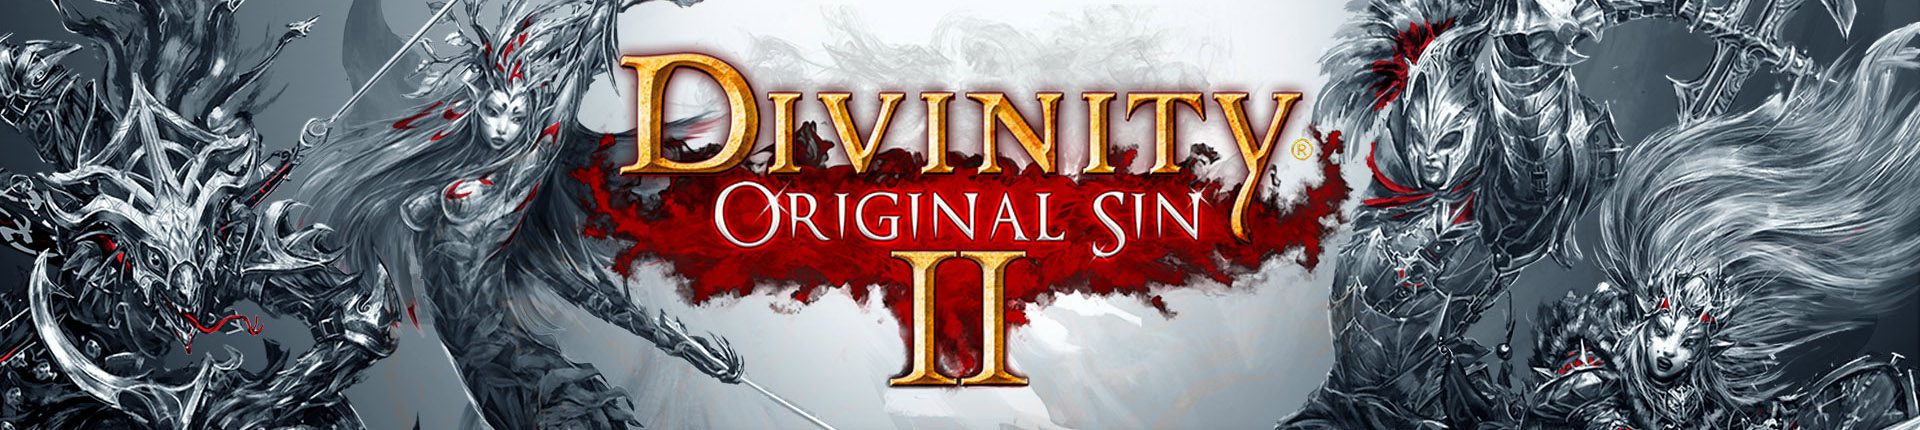 divinity original sin 2 xbox one digital code